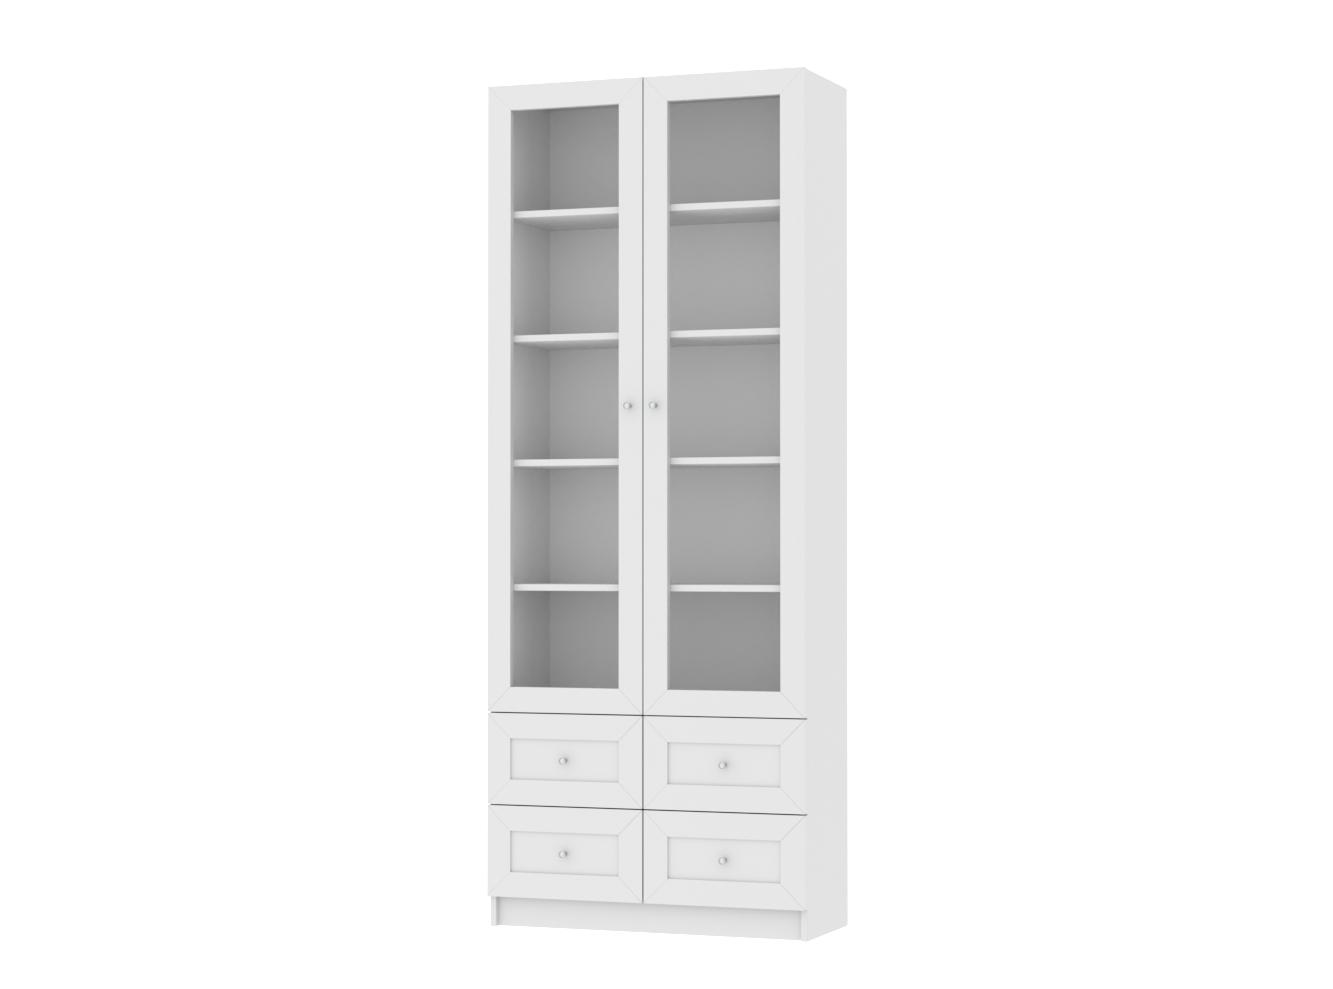 Книжный шкаф Билли 316 white ИКЕА (IKEA) изображение товара